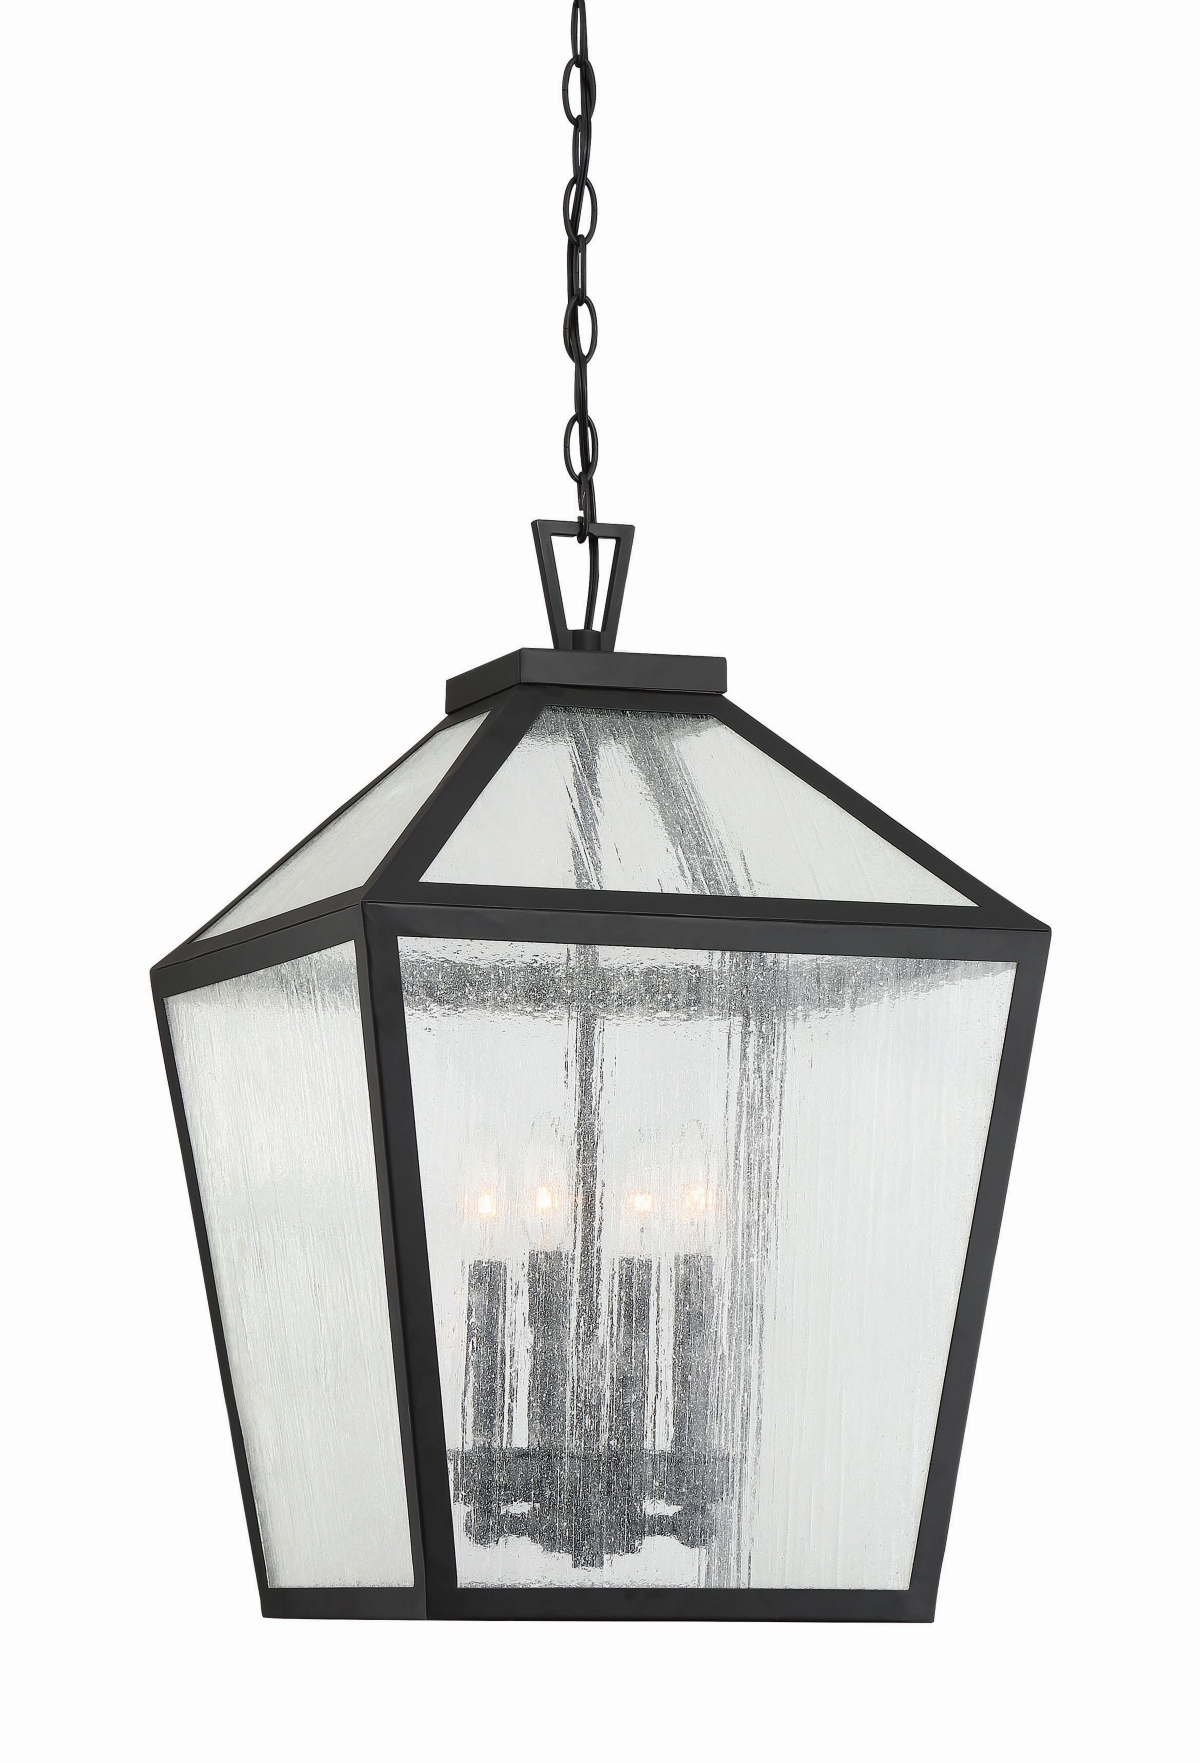 Woodstock 4-Light Outdoor Hanging Lantern in Black - Black